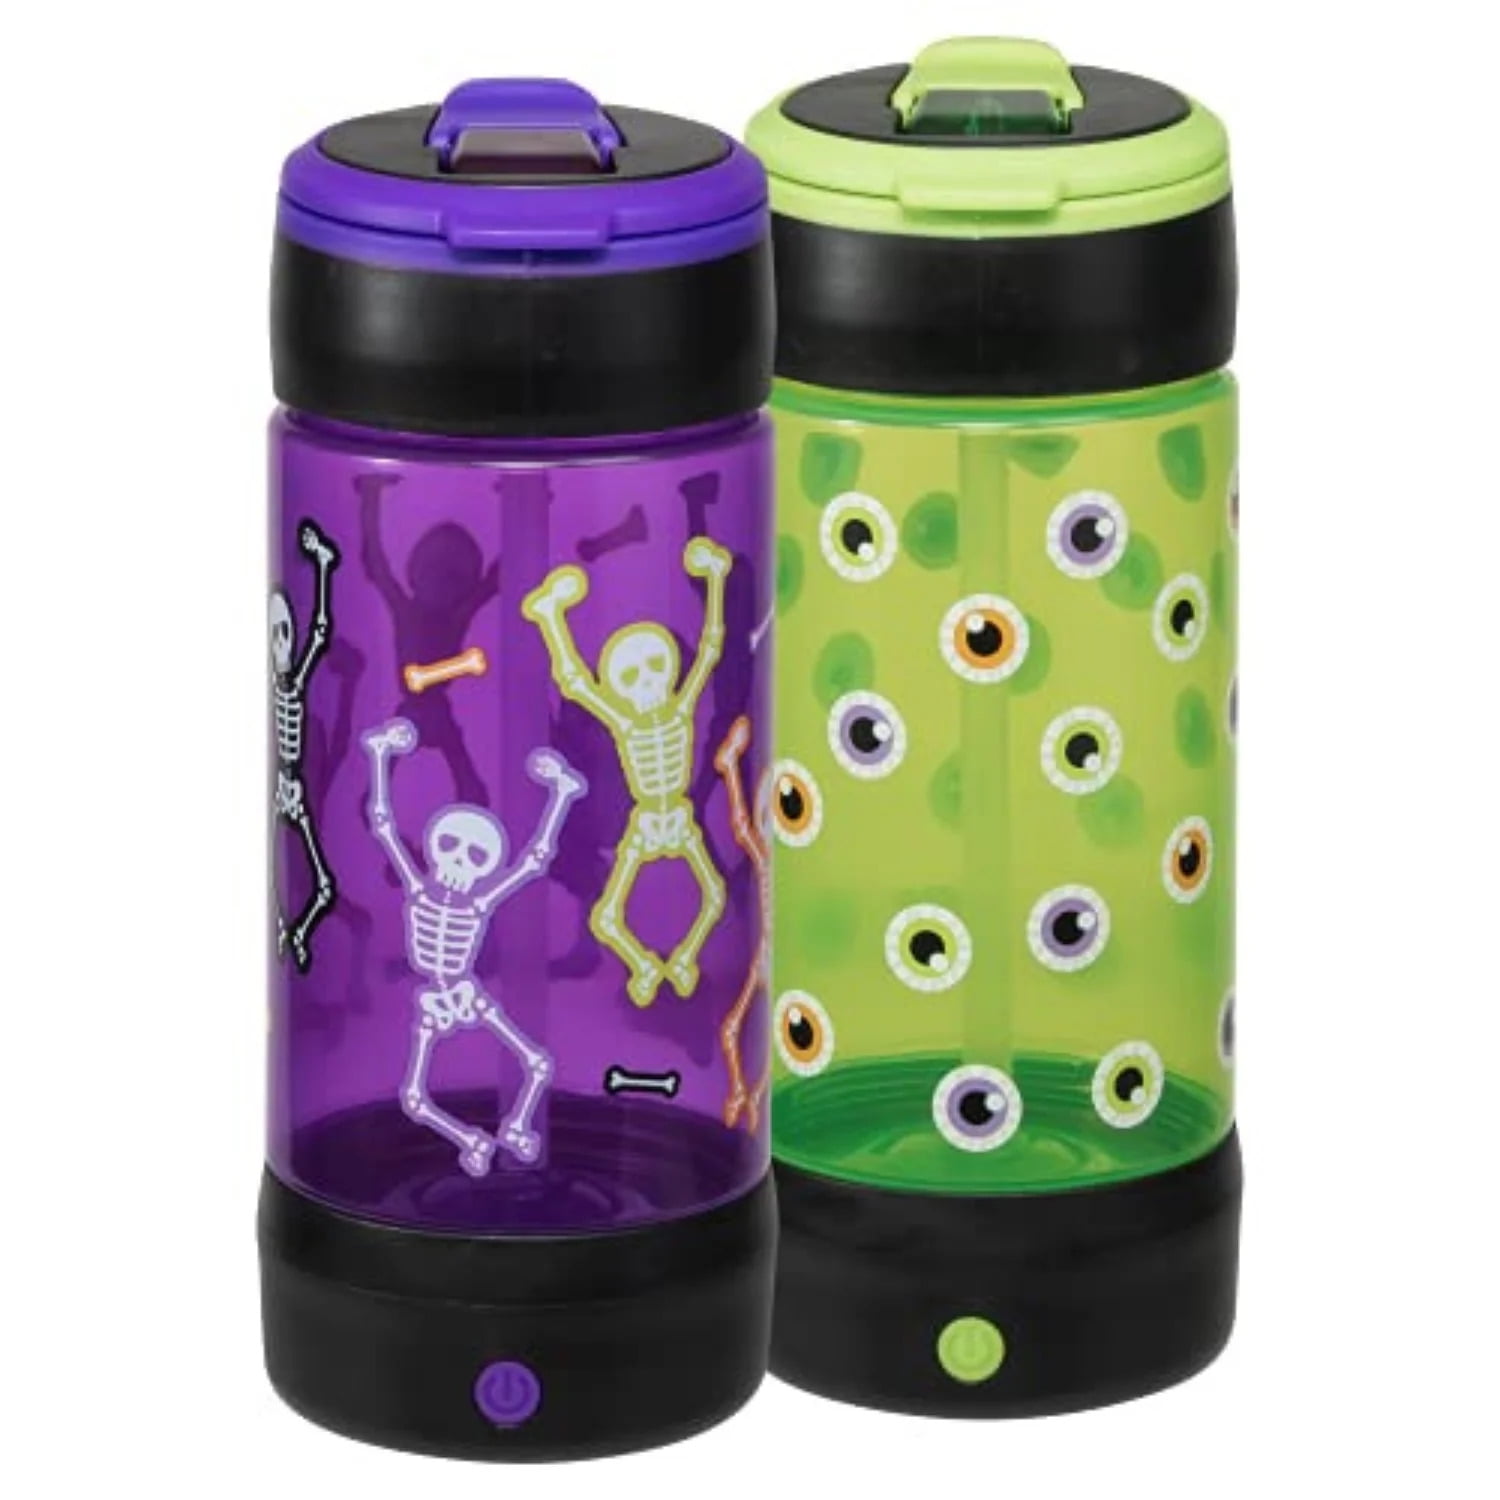 COOL GEAR 2-Pack 16 oz Pop Lights Water Bottles | Light Up & Designed  Travel Cup for Kids, Outdoors, Gifts - Sunglasses/Seek Magic